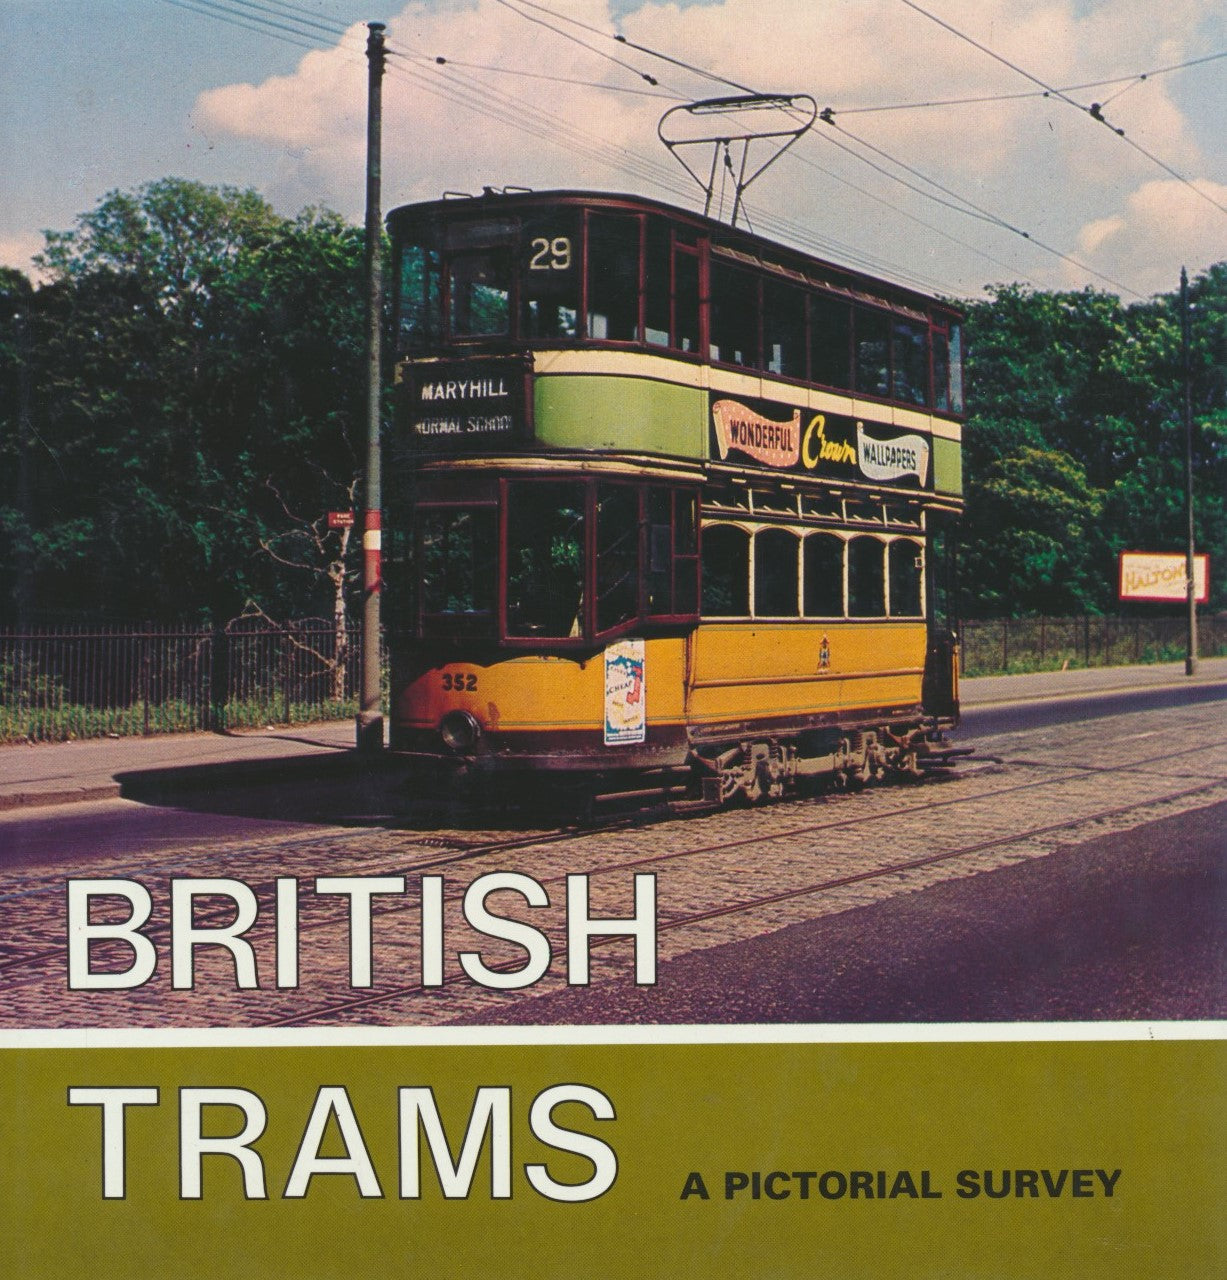 British Trams: A Pictorial Survey